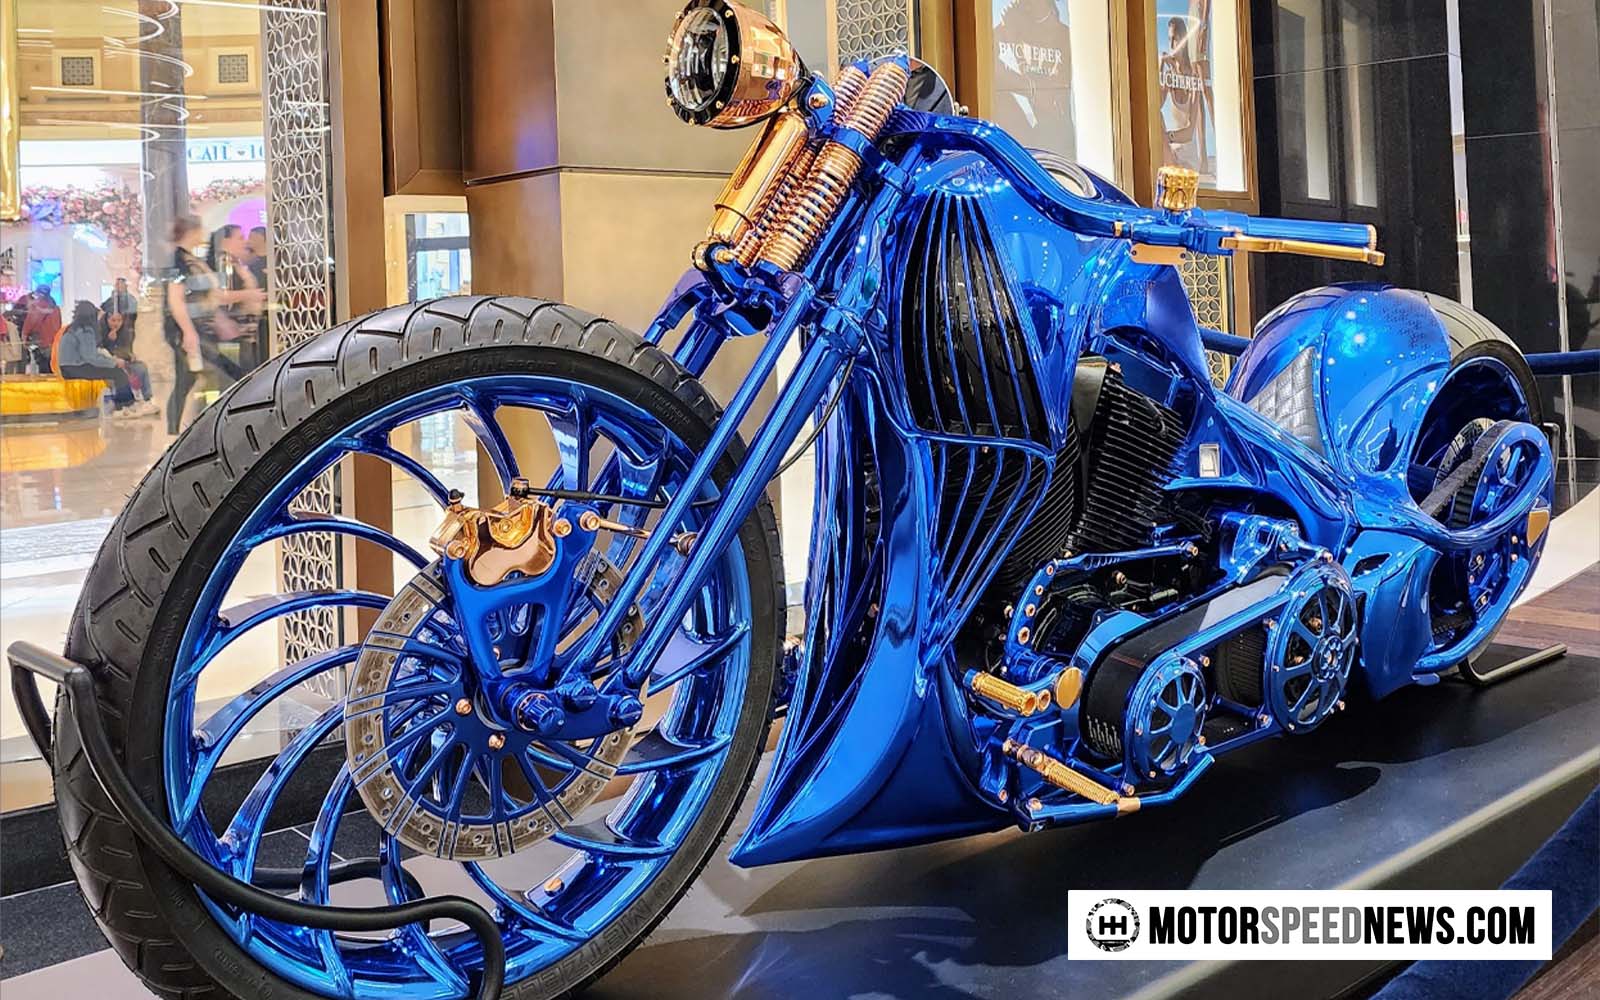 Bucherer Blue Harley Davidson on display in Las Vegas shop.